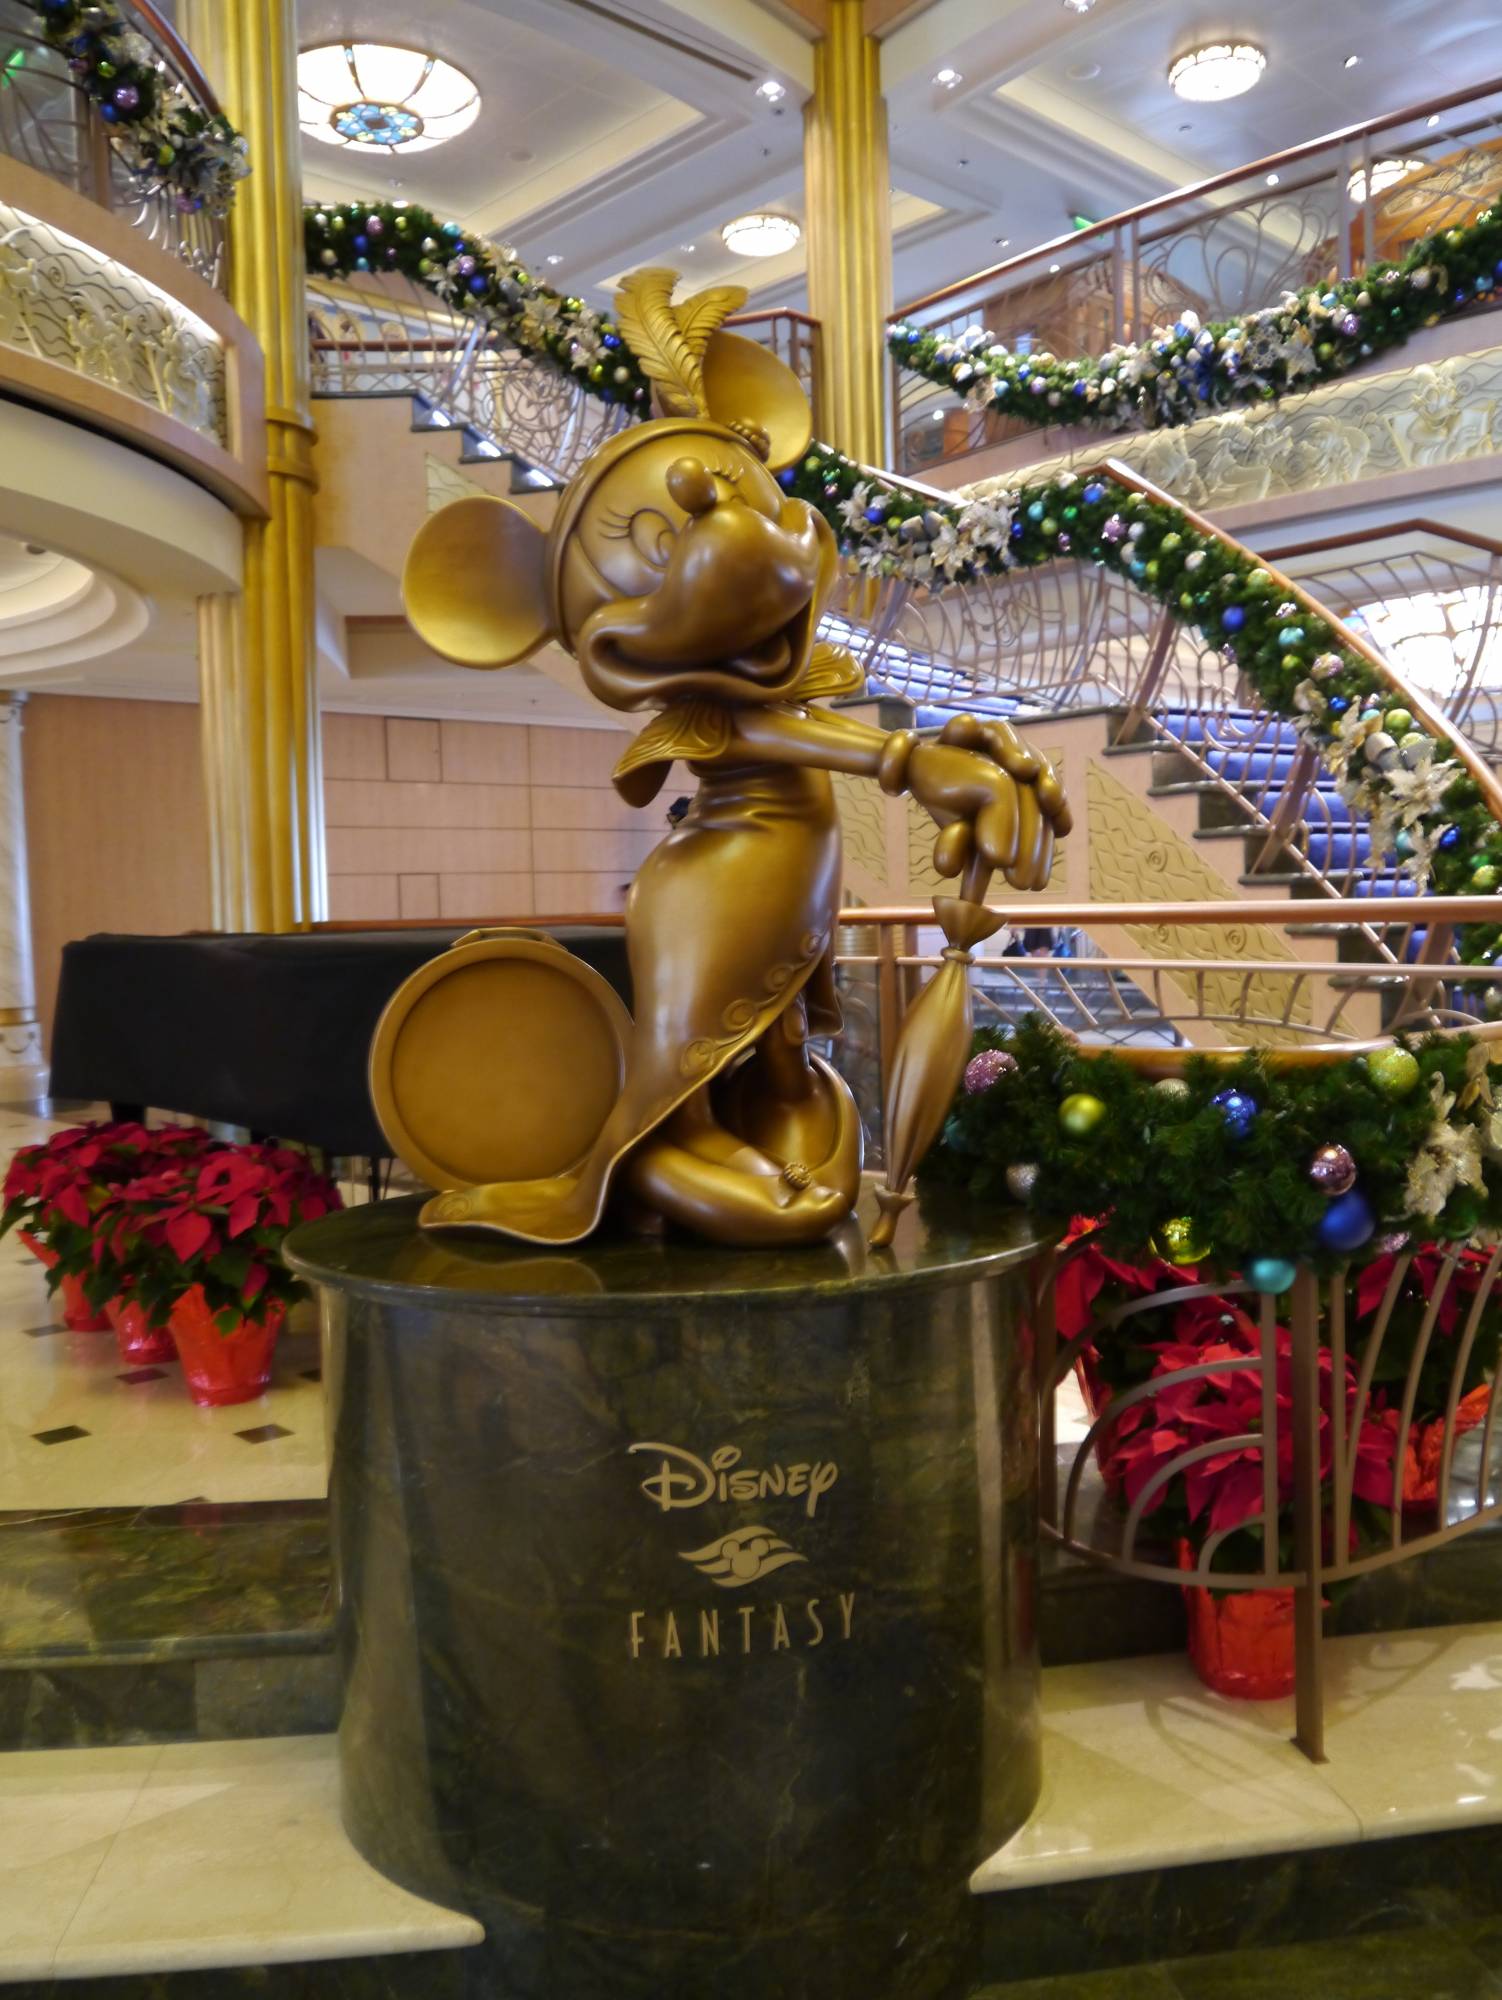 Disney Fantasy - Minnie statue